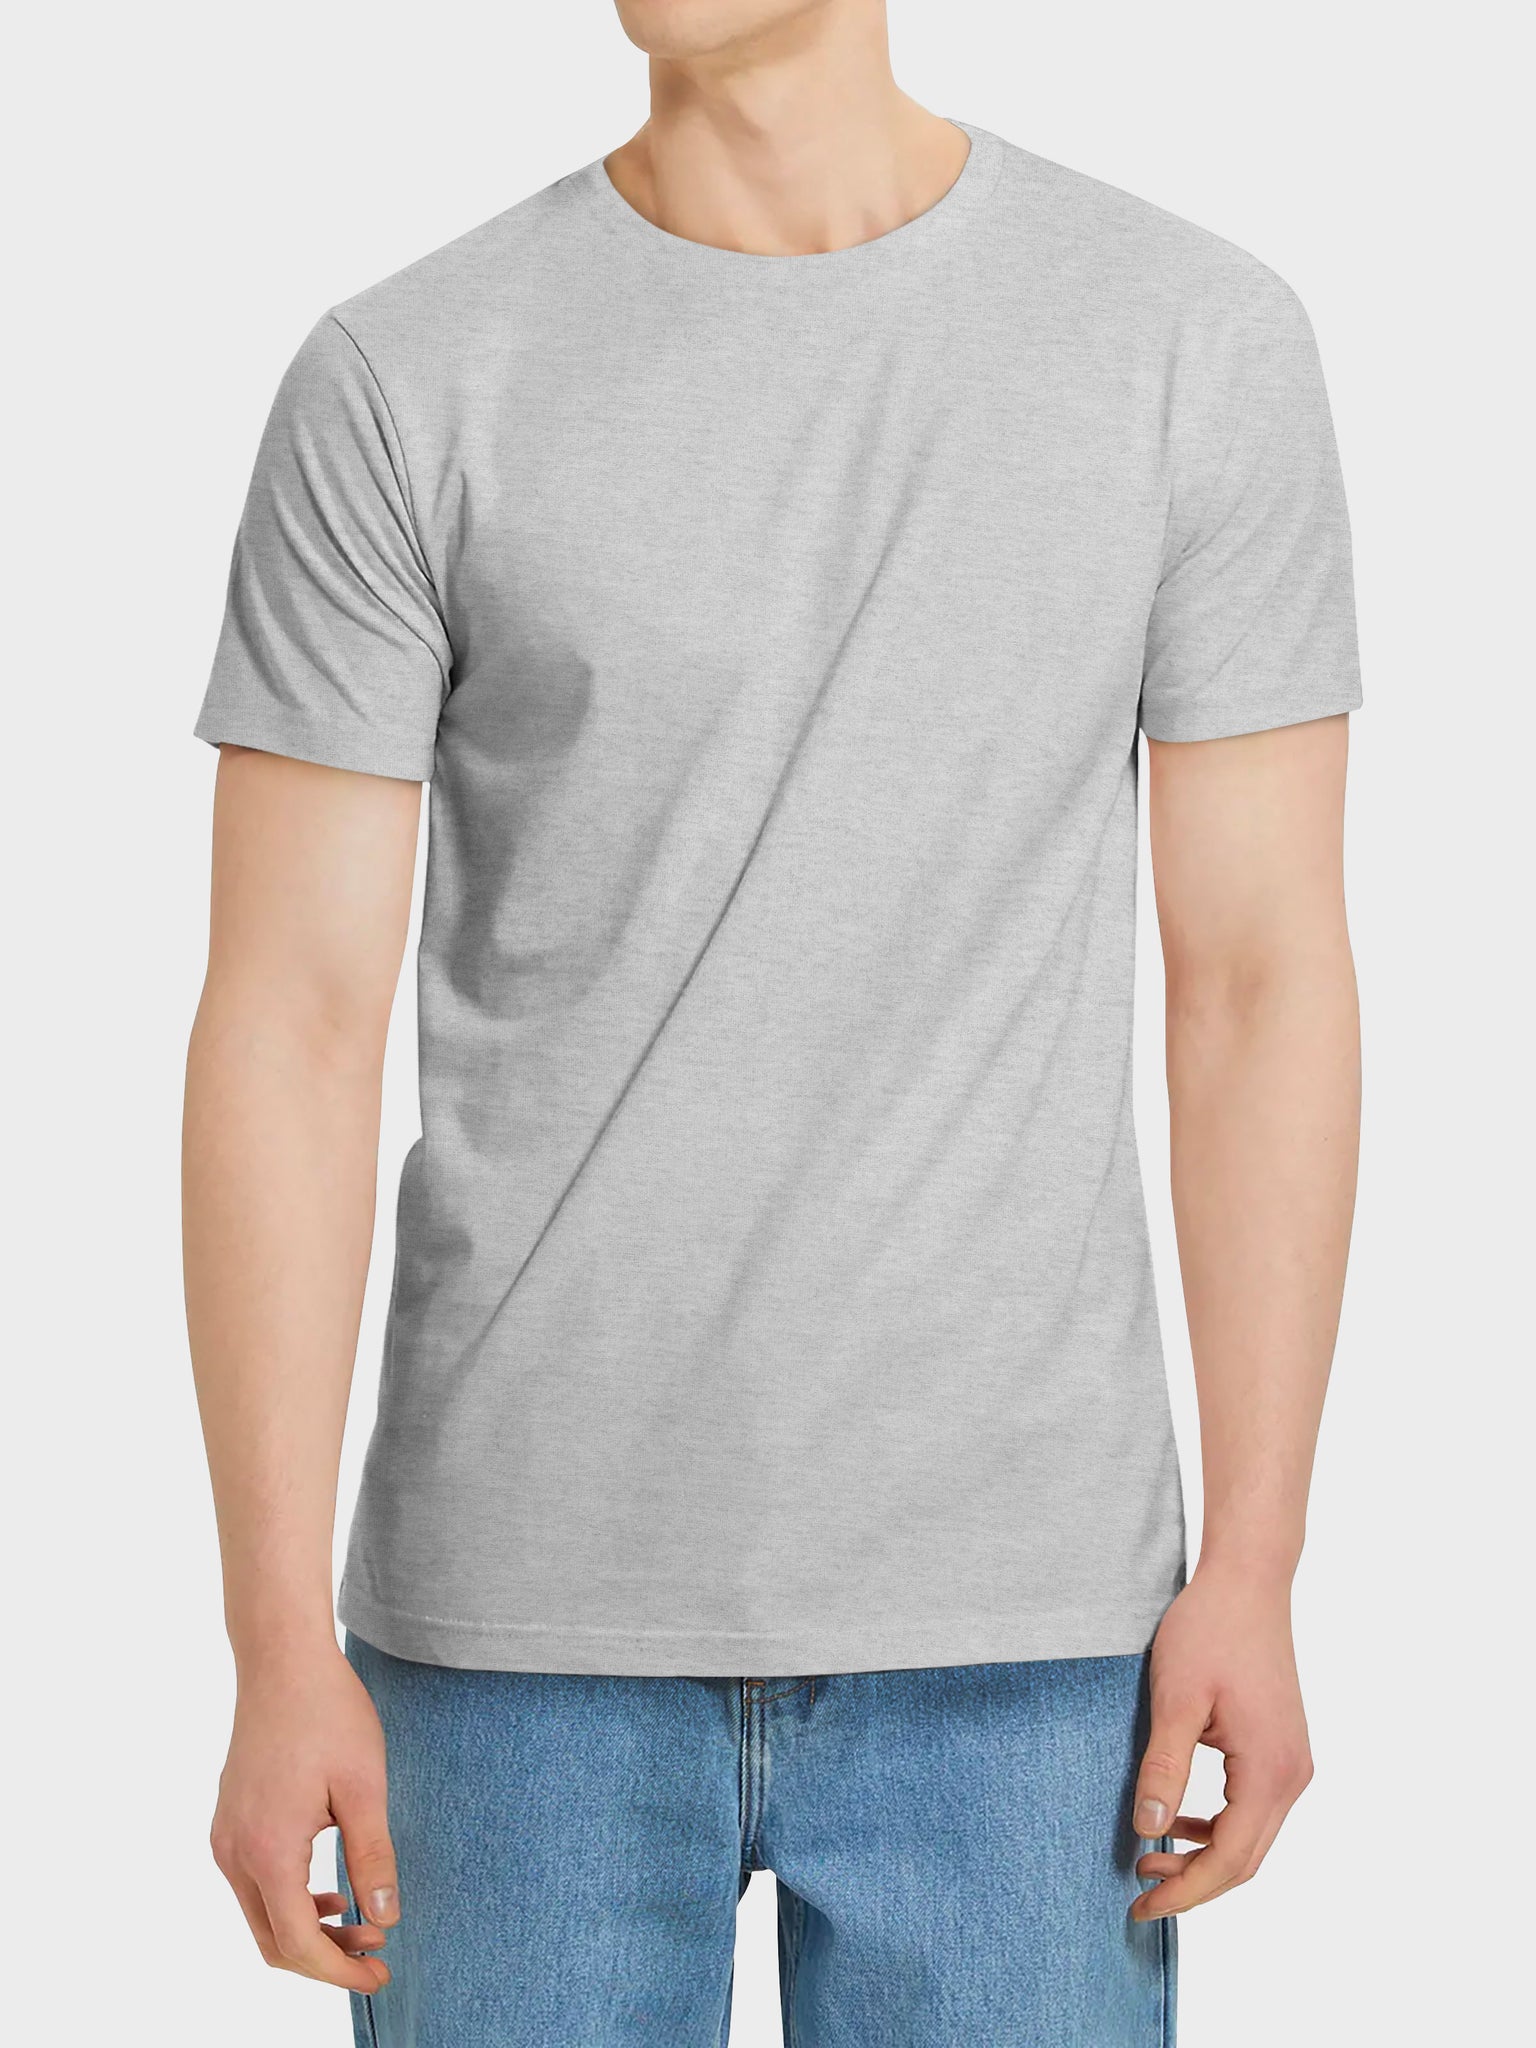 Cathalem T Shirts Men Crew Tee Summer Cotton Casual Short Sleeves Shirts  Tops,AG XL